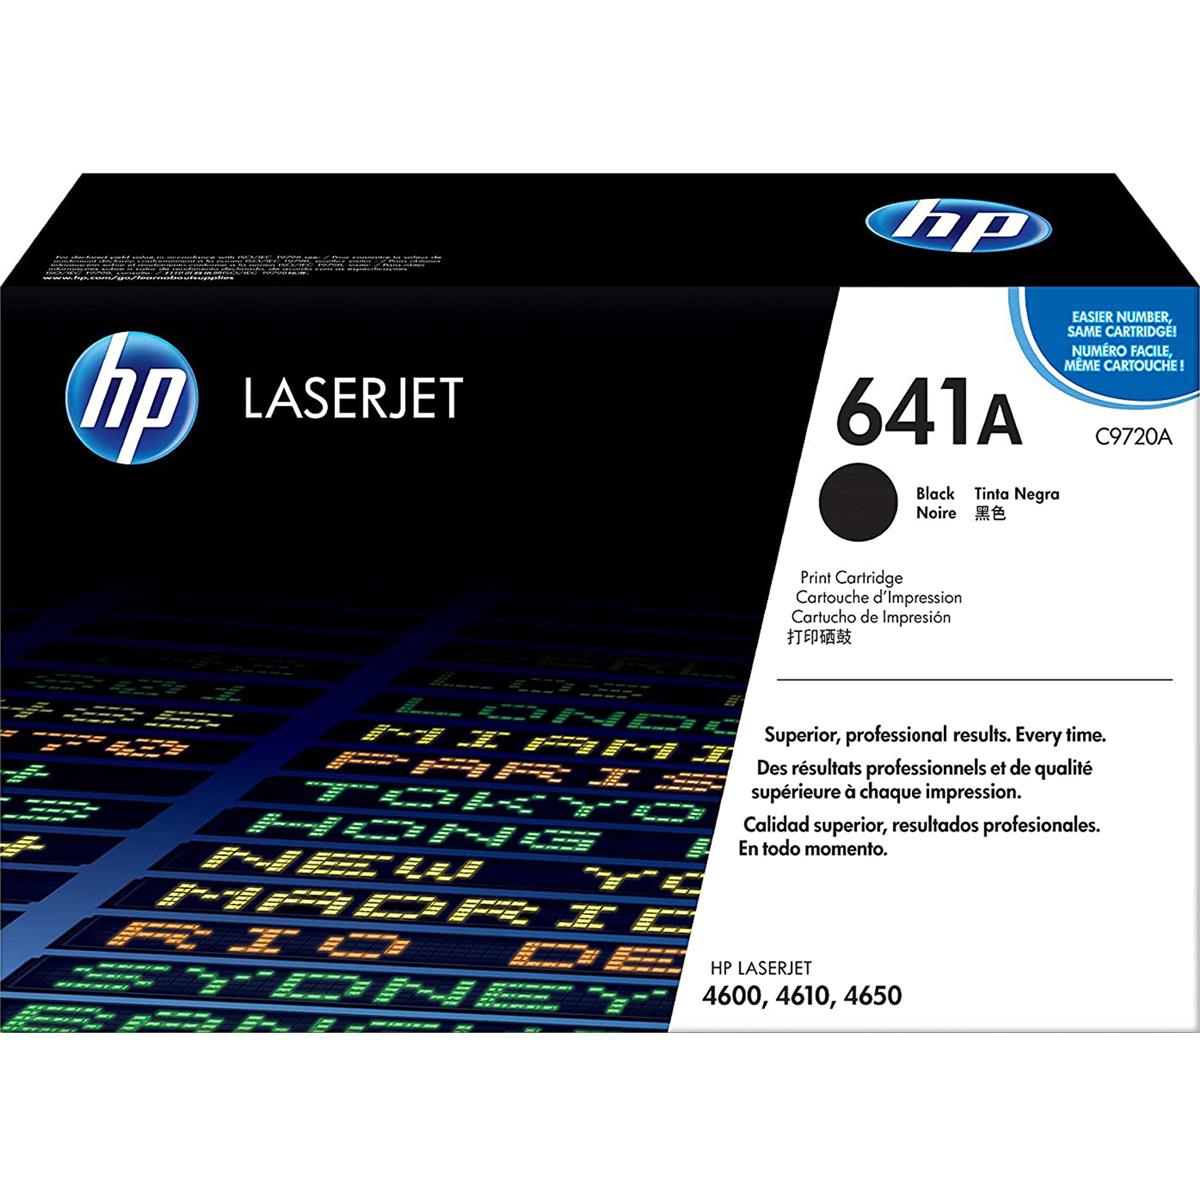 

HP C9720A Black Cartridge for Color LaserJet Printers